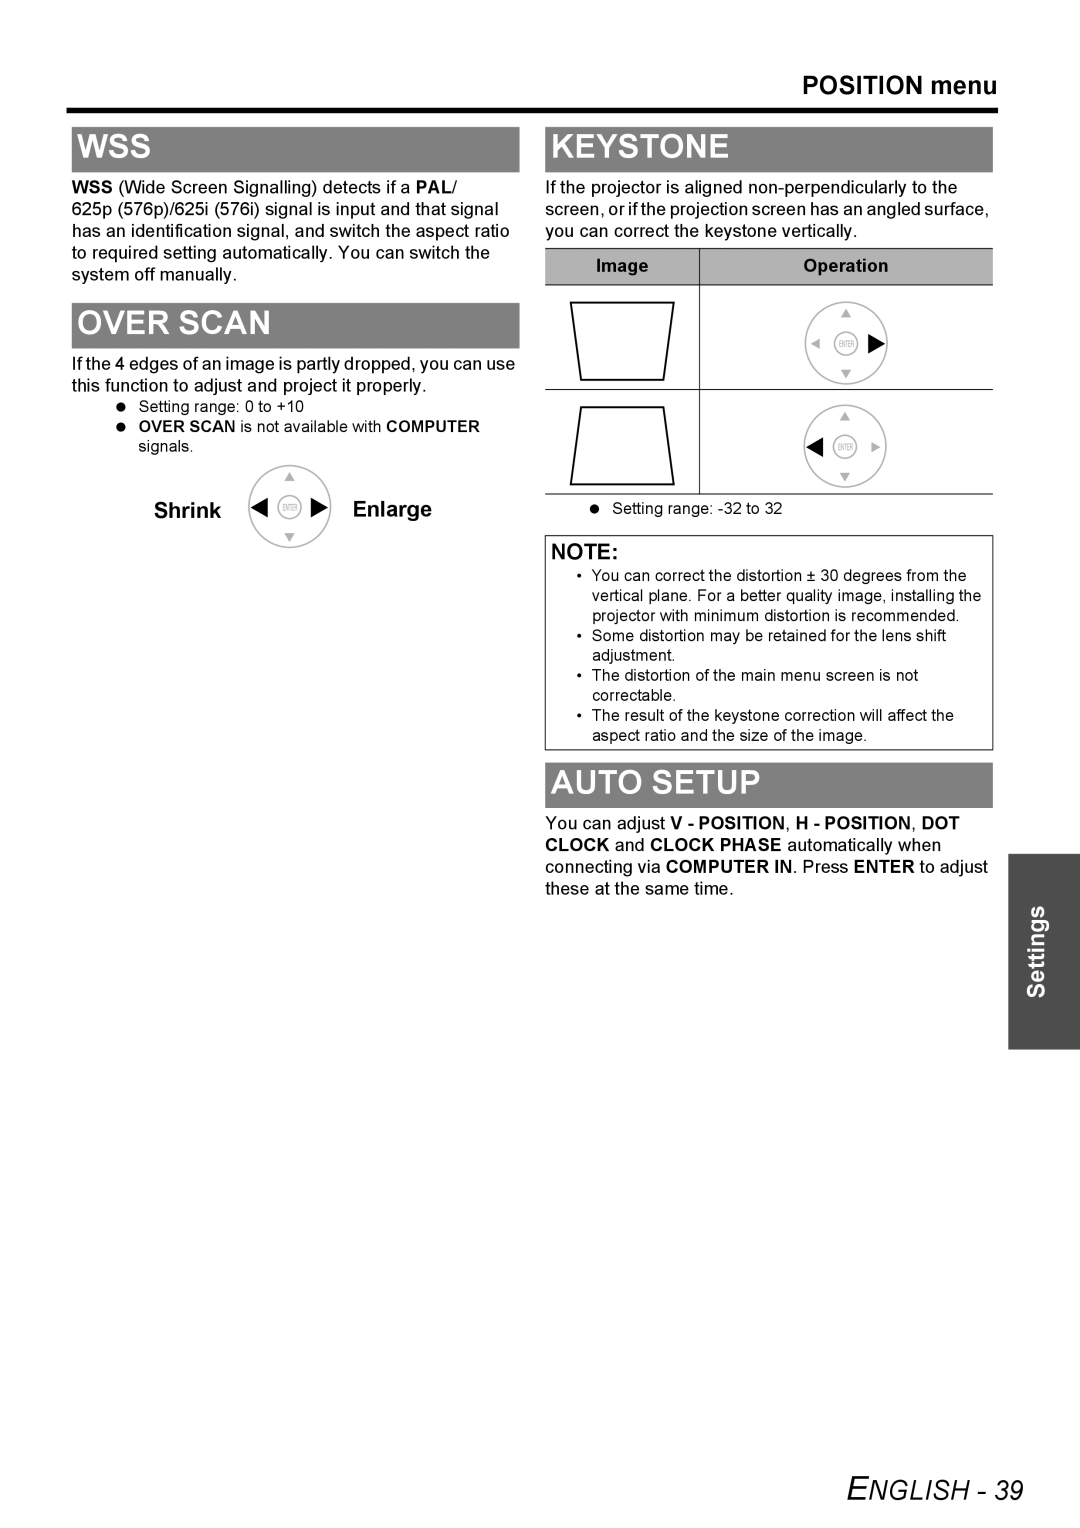 Panasonic PT-AE3000E manual Over Scan, Keystone, Auto Setup, POSITION menu, English, Settings 